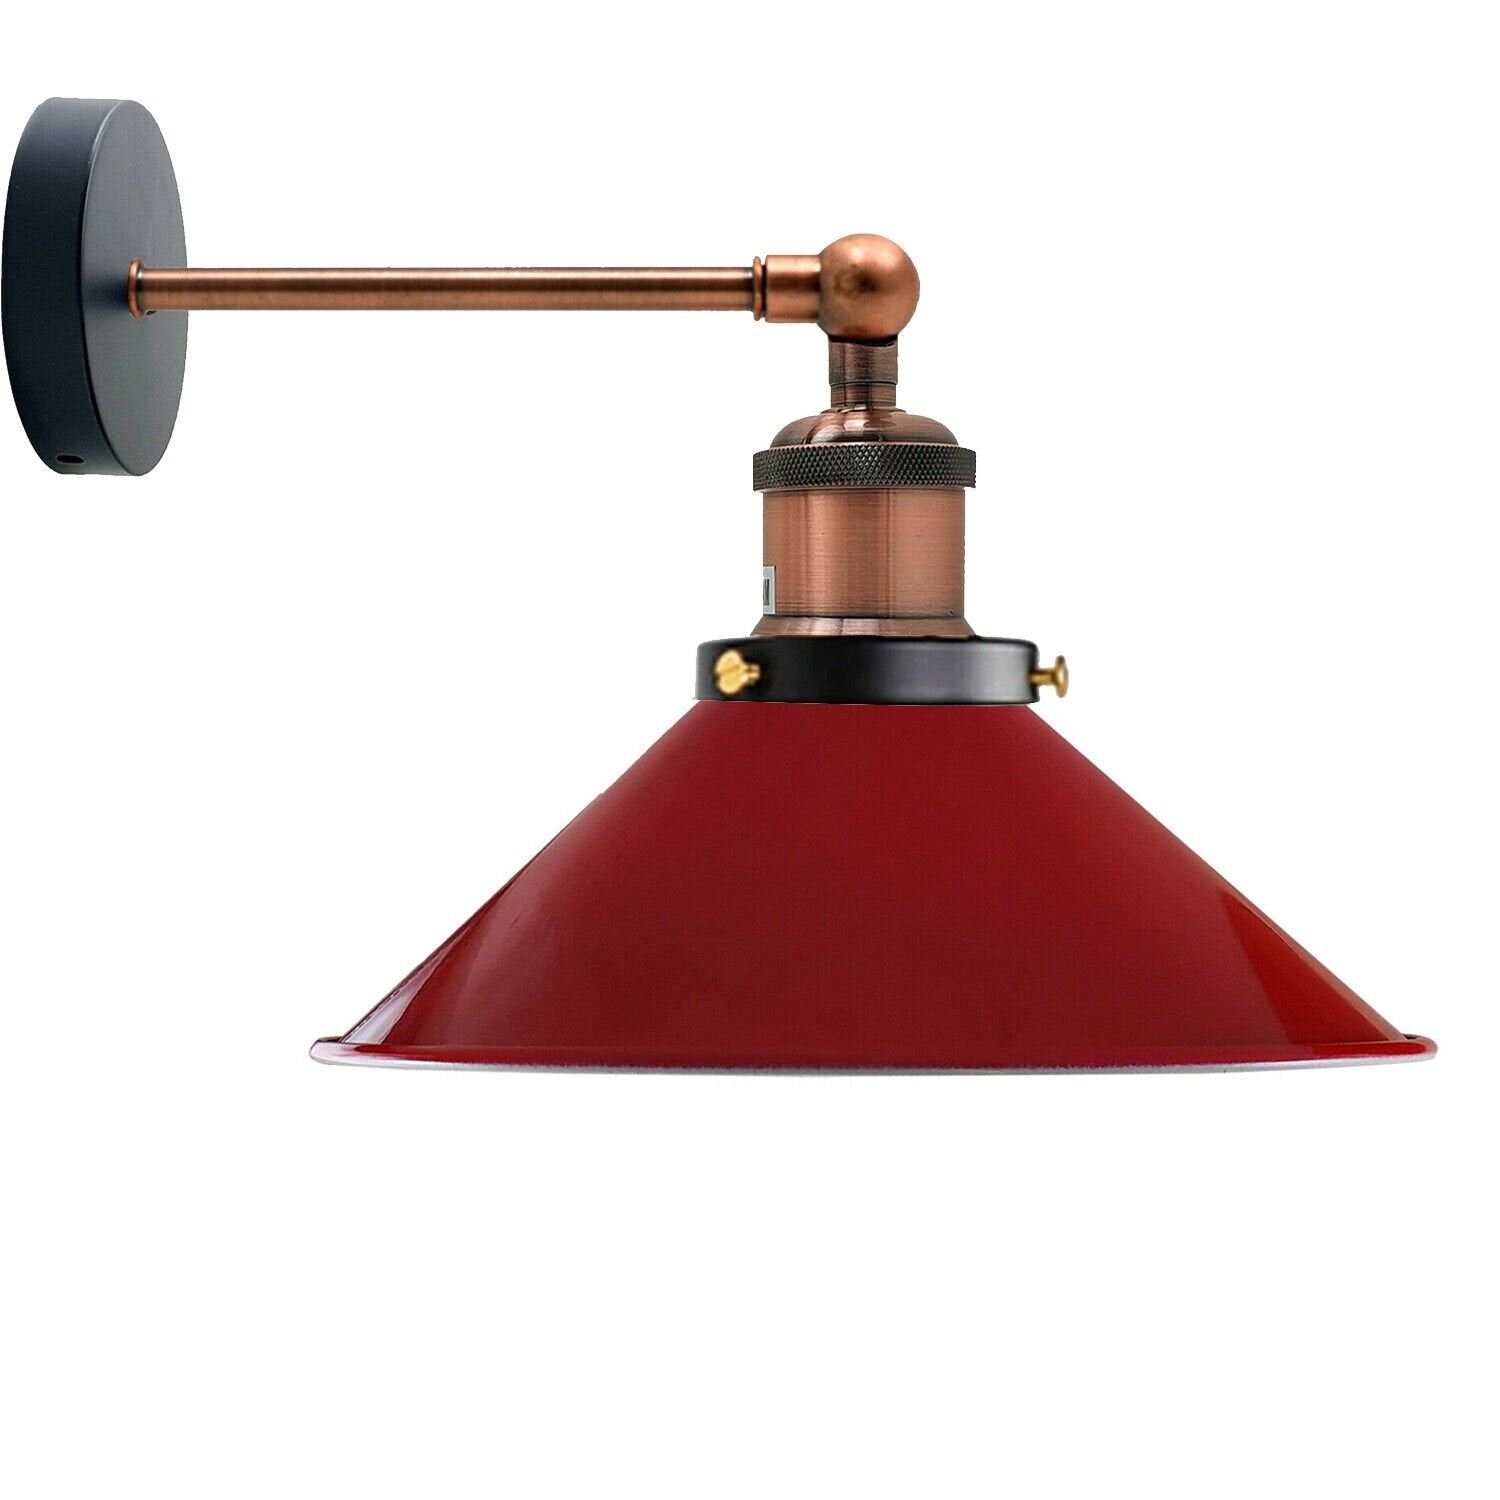 Red Metal Cone Wall Scones Lamp.JPG